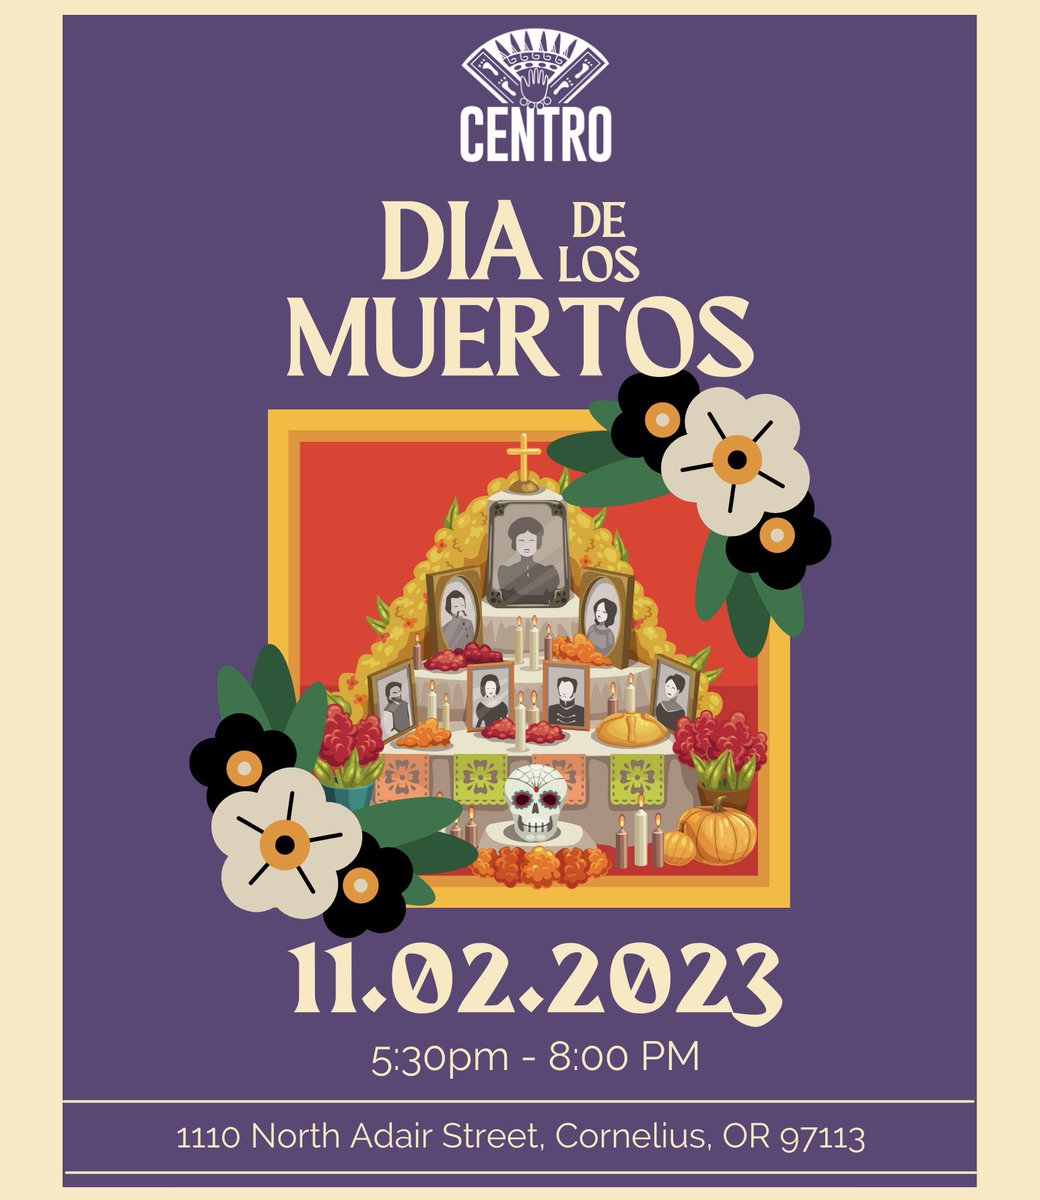 Join us Nov 2nd at Centro Cultural for a vivid Día de los Muertos celebration! Relive memories and traditions in full splendor. More updates coming soon! 💀🌺 #DiaDeLosMuertos #CentroFestivities